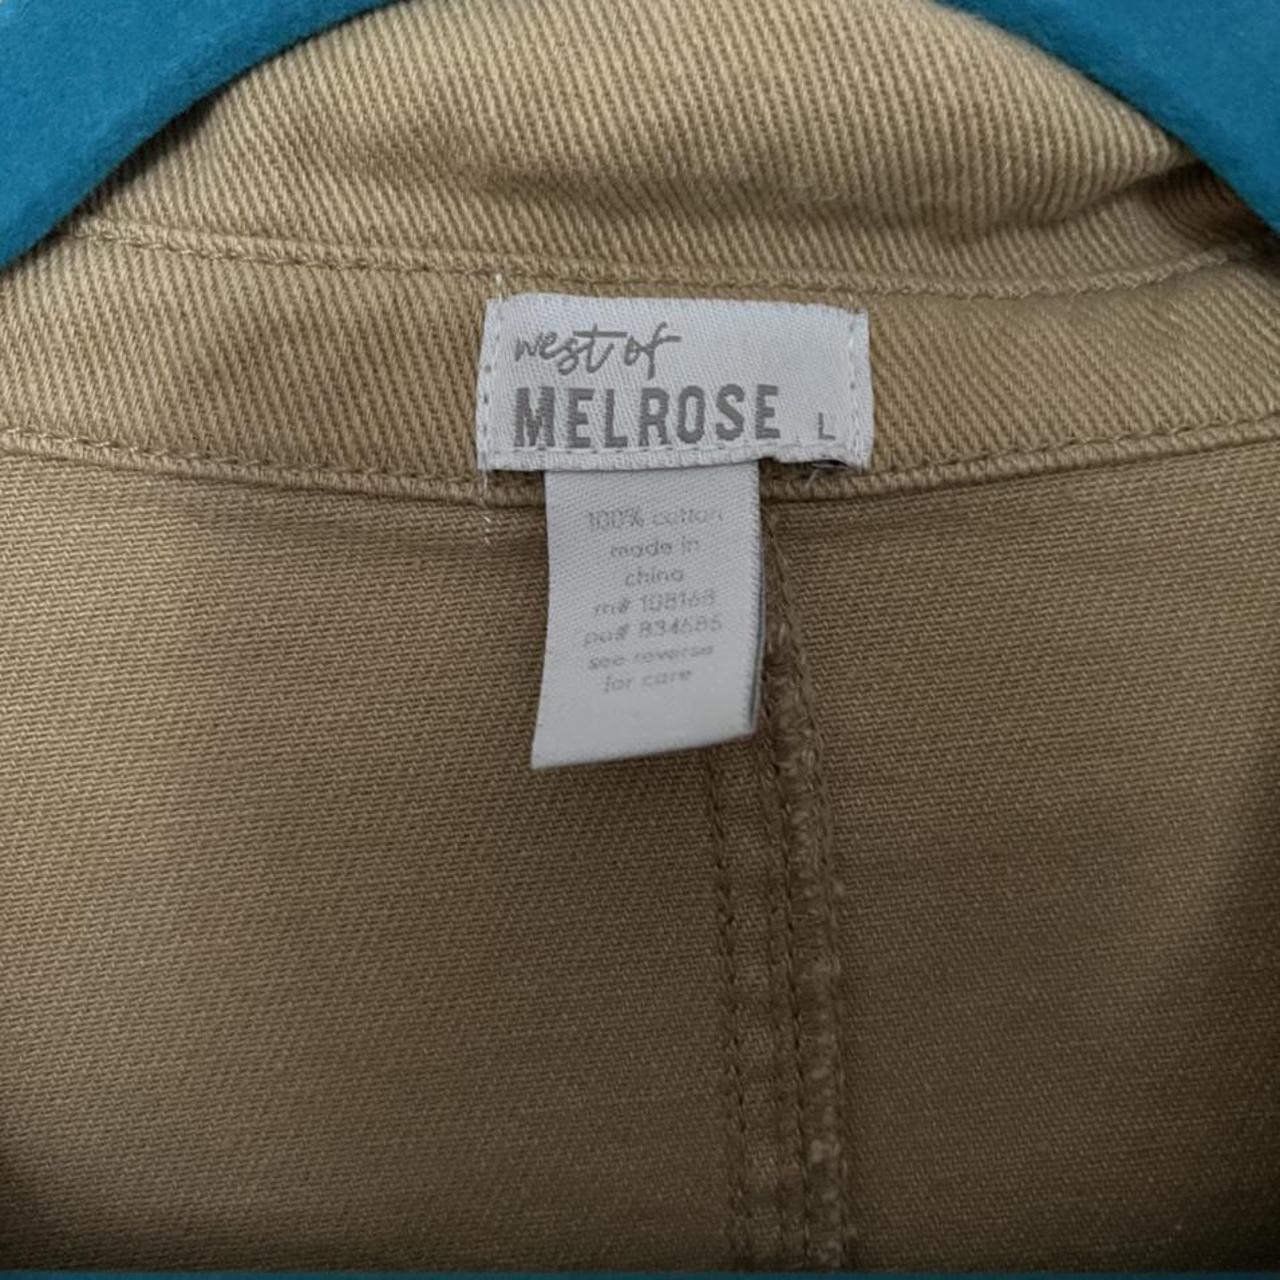 Product Image 4 - West of Melrose Beige Jacket/